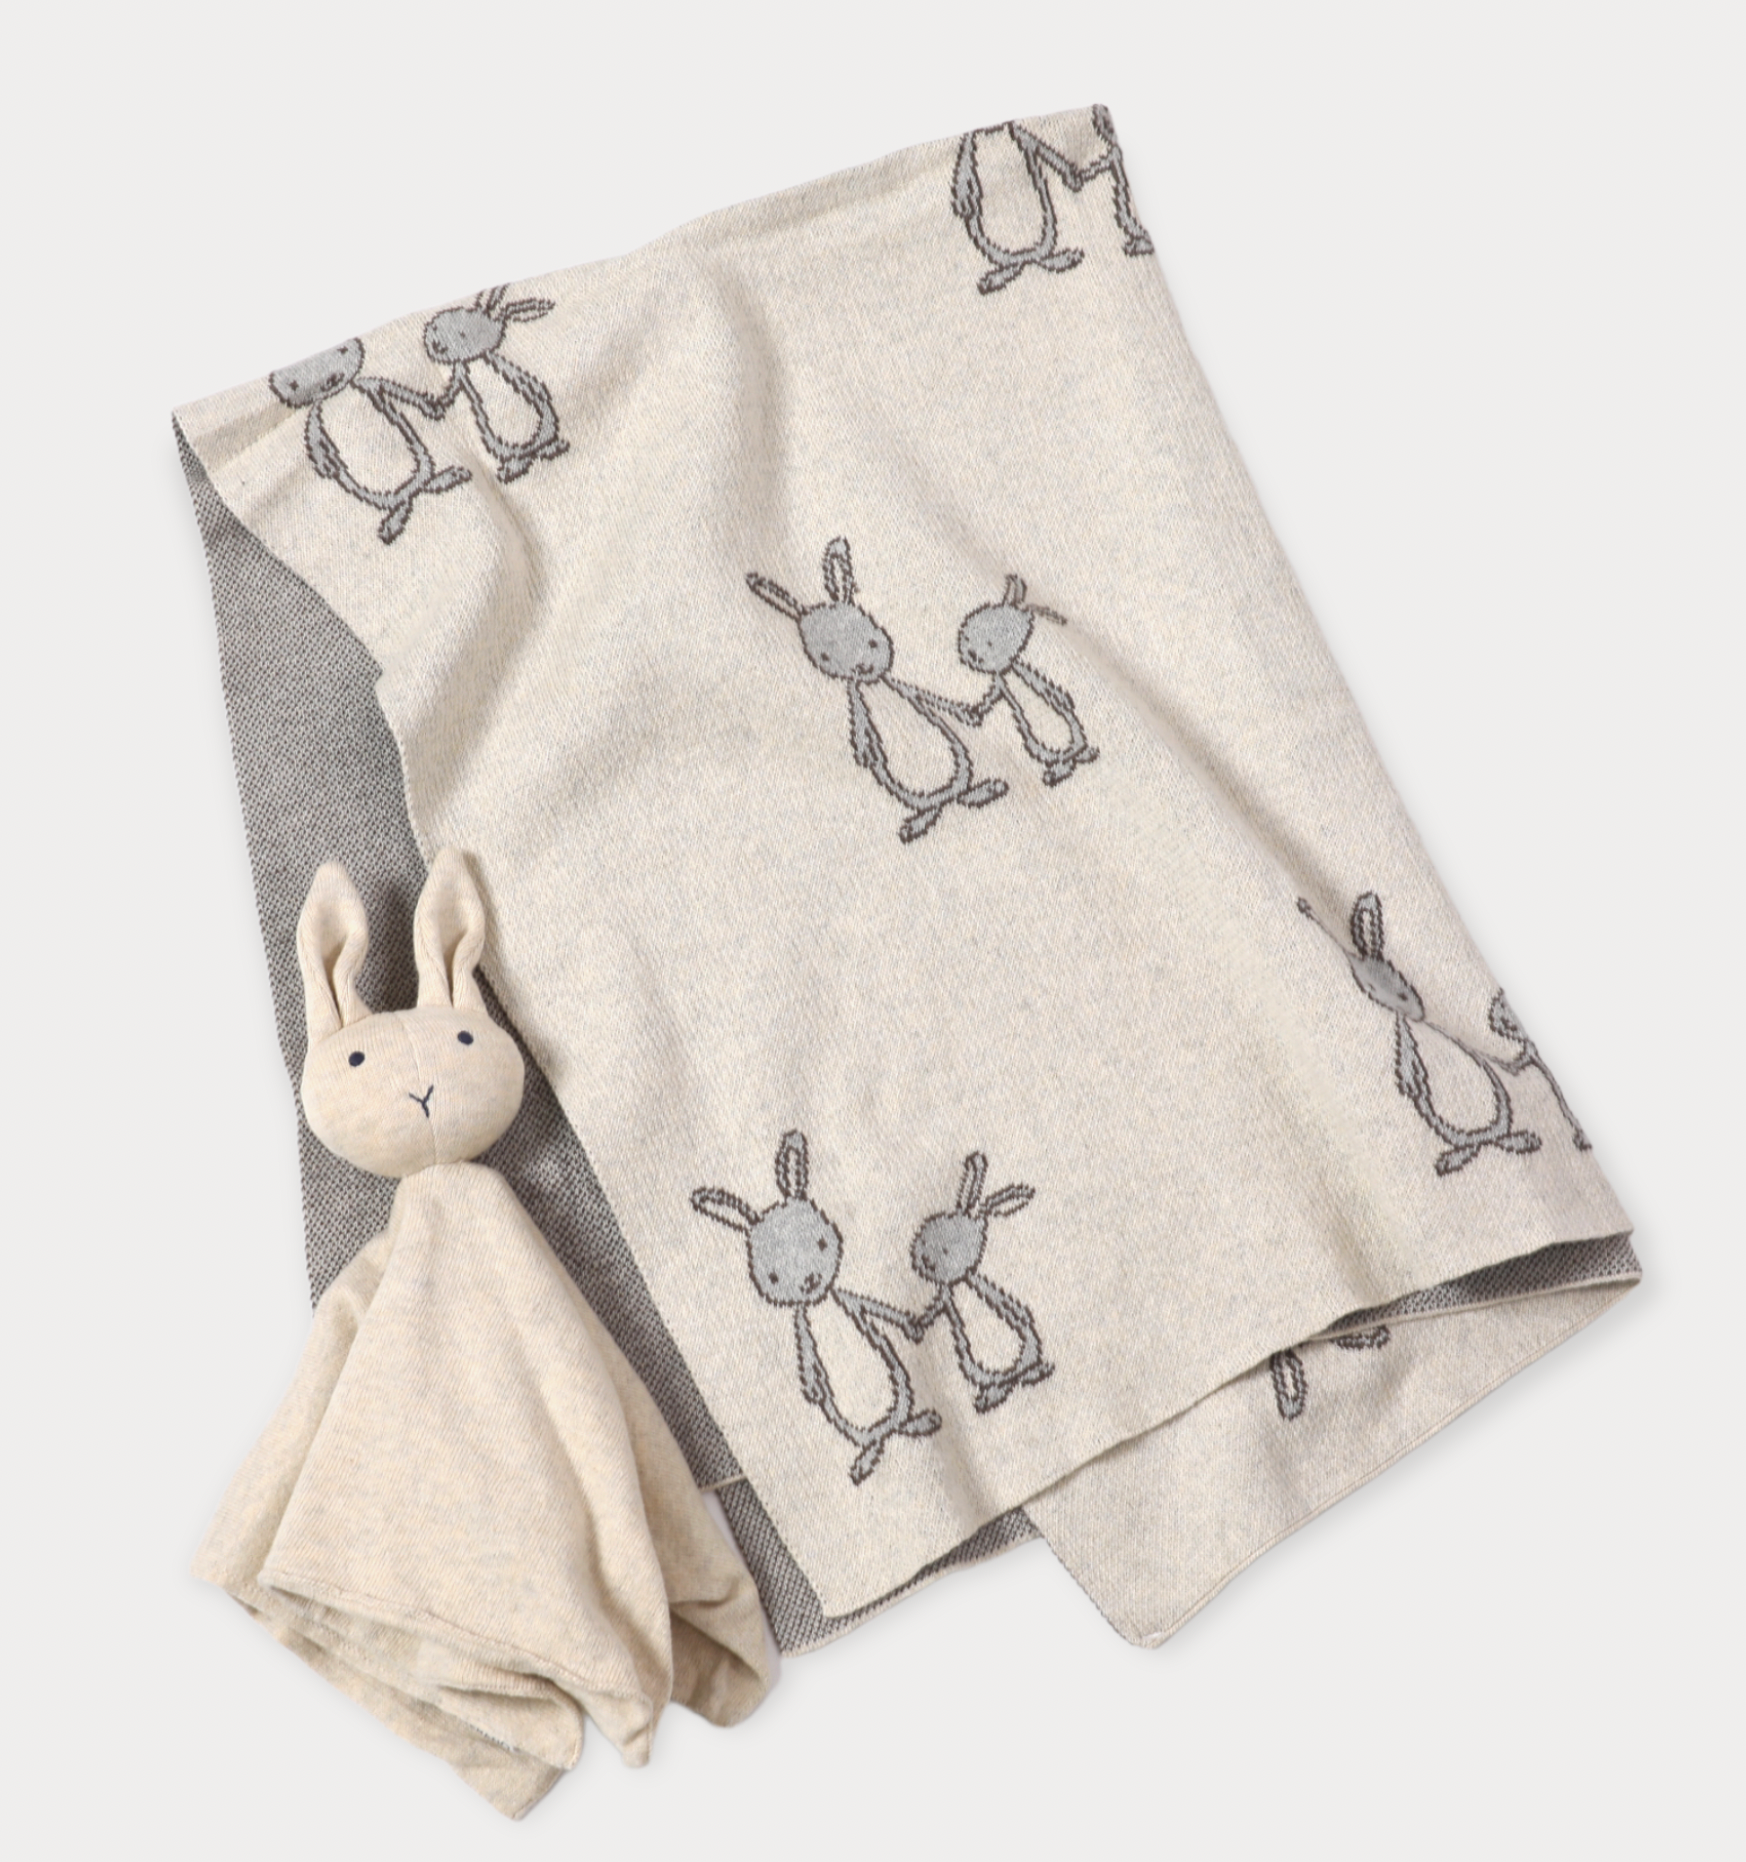 Viverano Jacquard Knit Blanket & Lovey Gift Sets